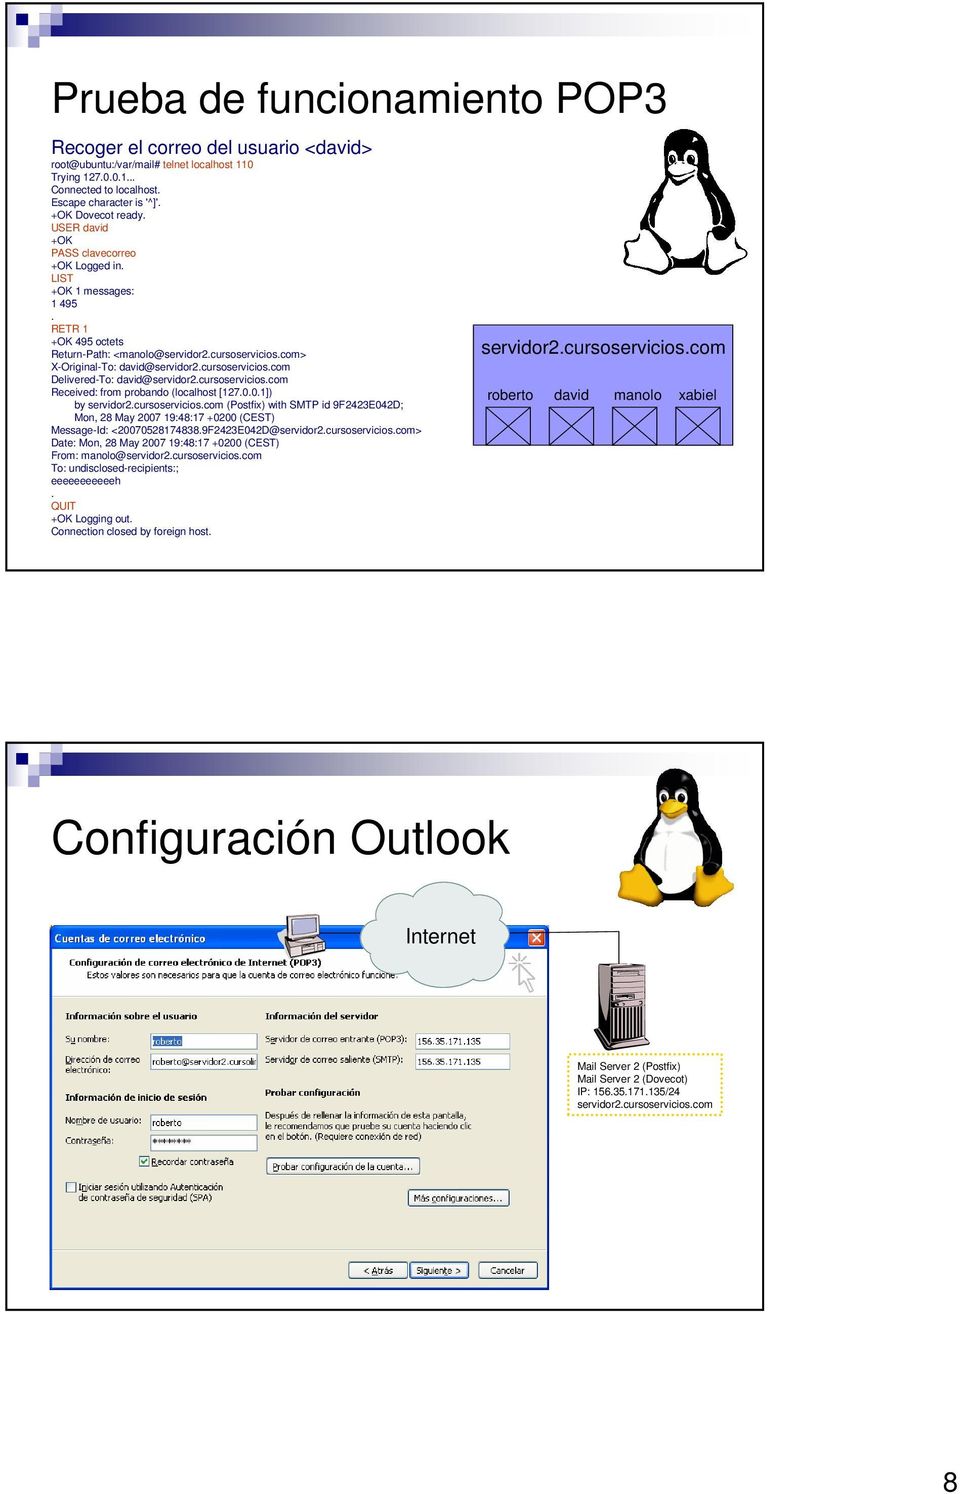 cursoservicios.com Received: from probando (localhost [127.0.0.1]) by servidor2.cursoservicios.com (Postfix) with SMTP id 9F2423E042D; Mon, 28 May 2007 19:48:17 +0200 (CEST) Message-Id: <20070528174838.